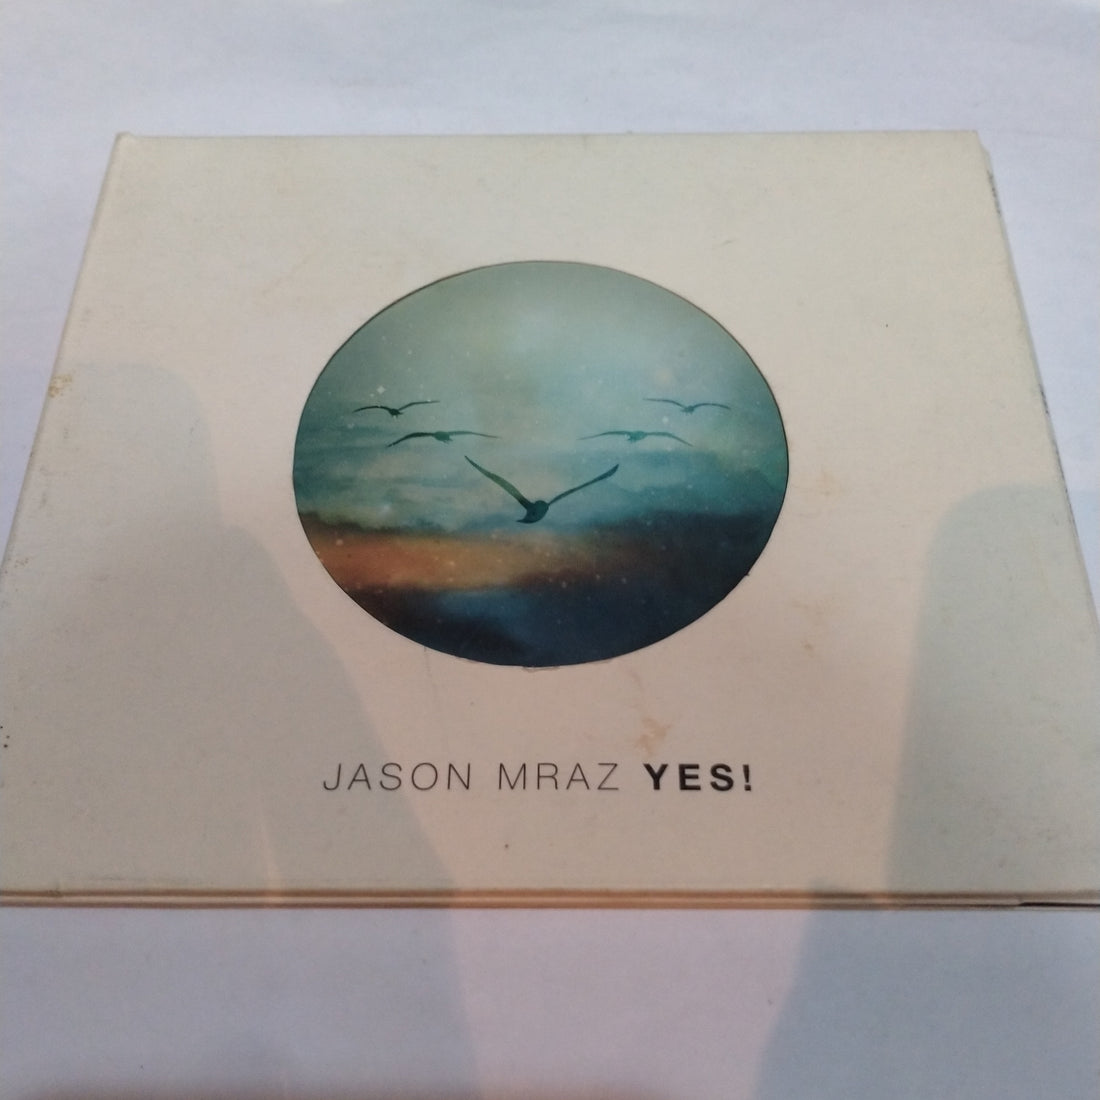 Jason Mraz - YES! (CD) (G)